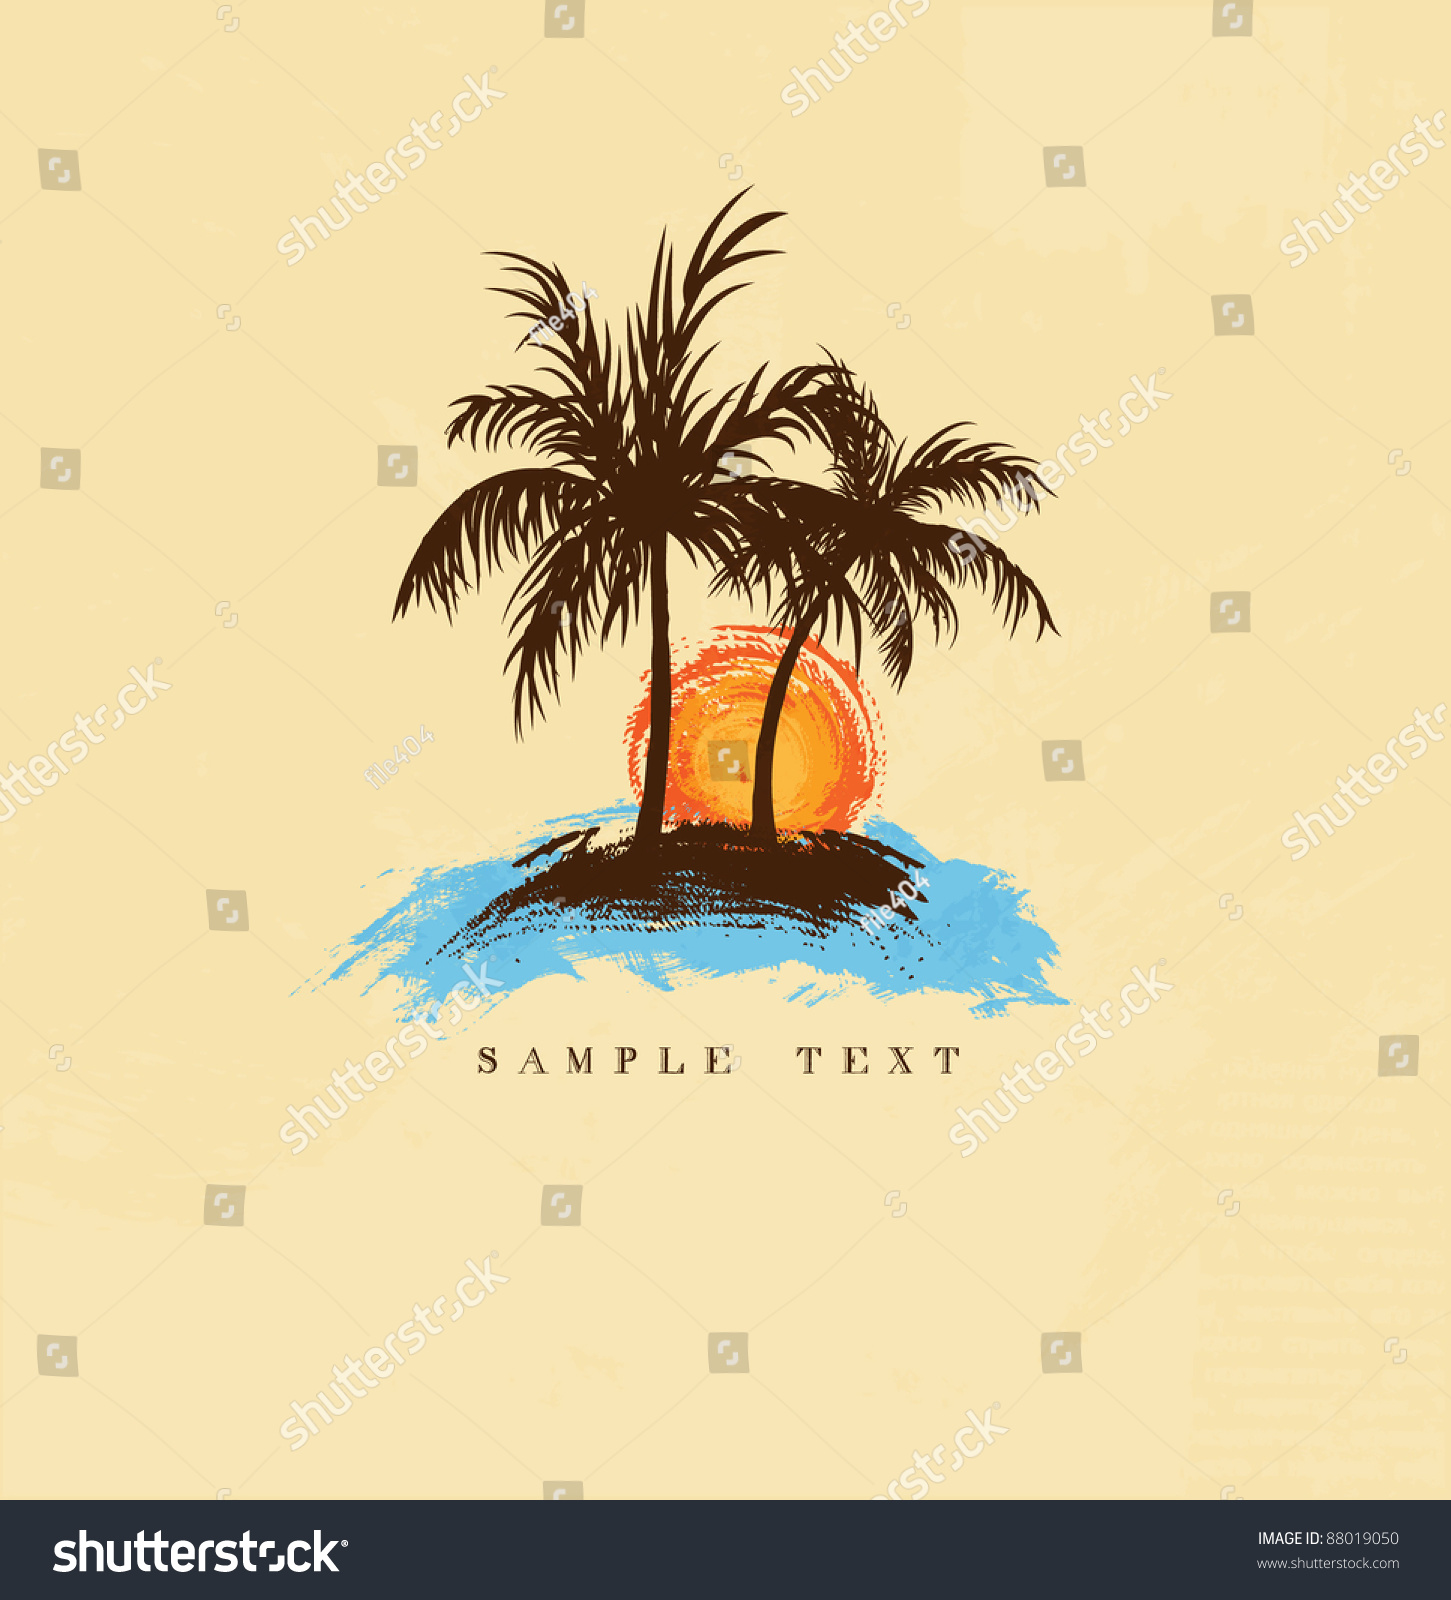 Palm Trees Stock Vector Illustration 88019050 : Shutterstock